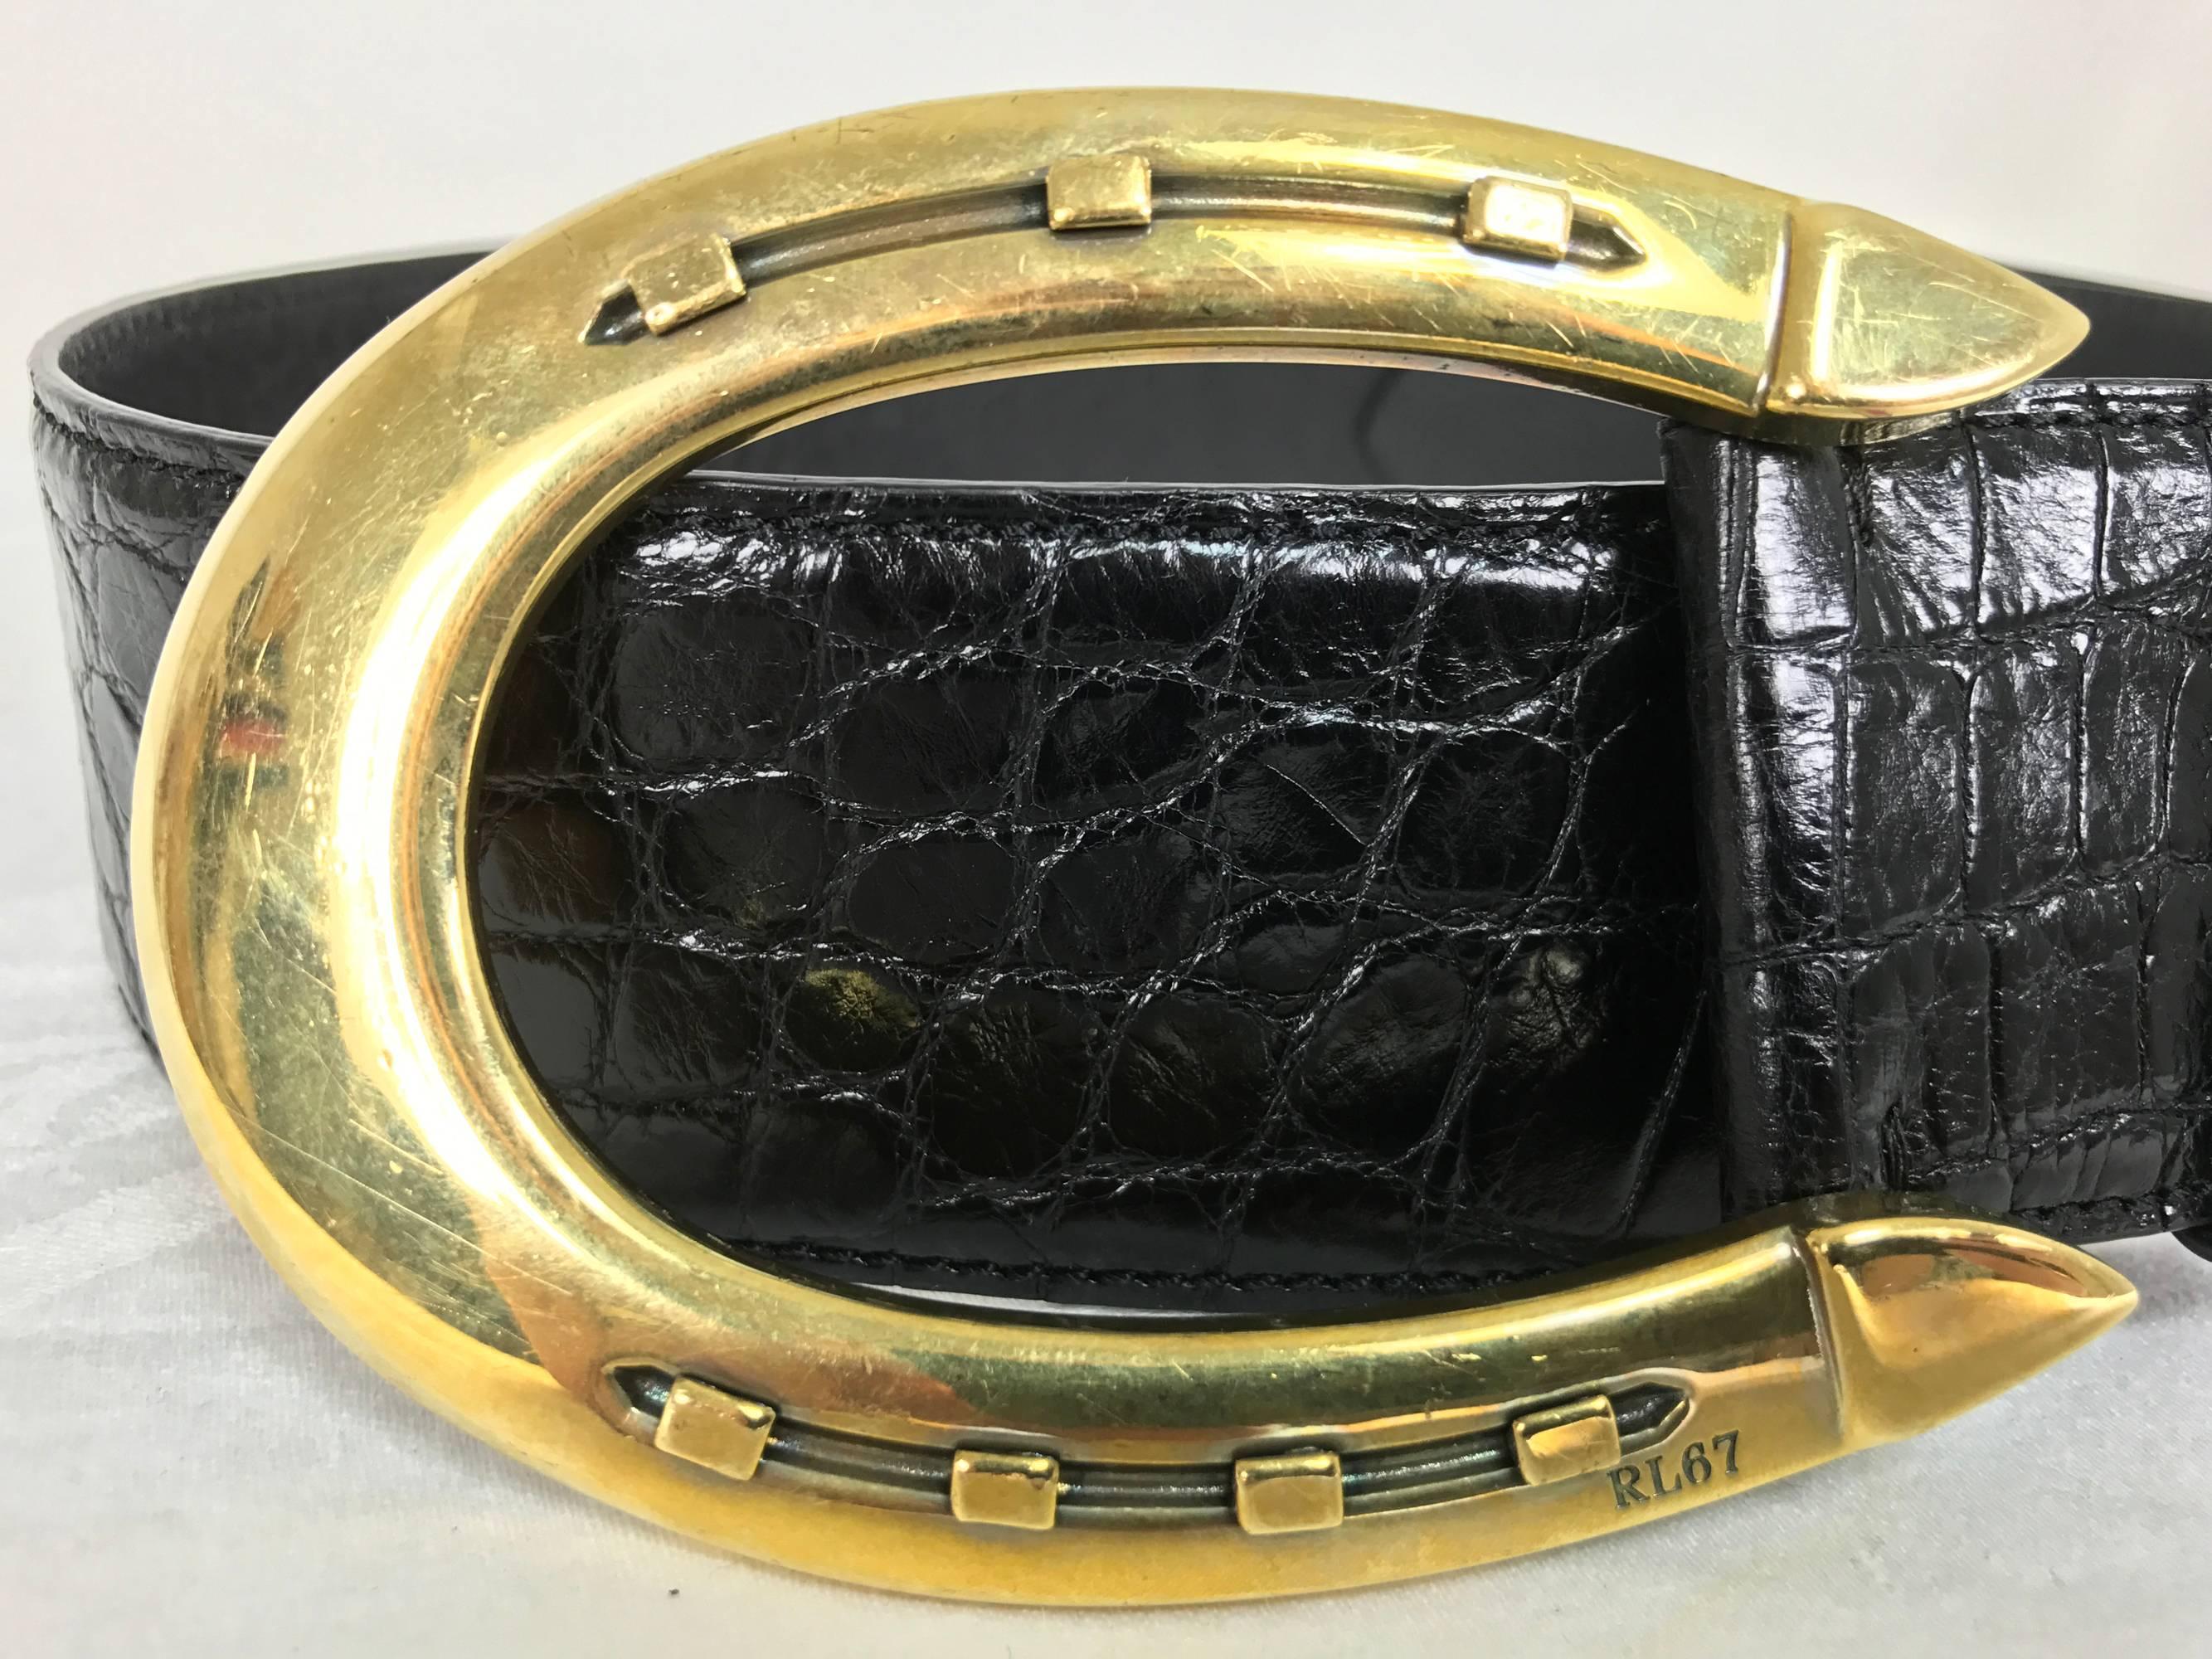 Beautiful Ralph Lauren glazed black alligator belt with a heavy gold horseshoe buckle marked size medium...In excellent condition, looks unworn.
Measurements are:
2